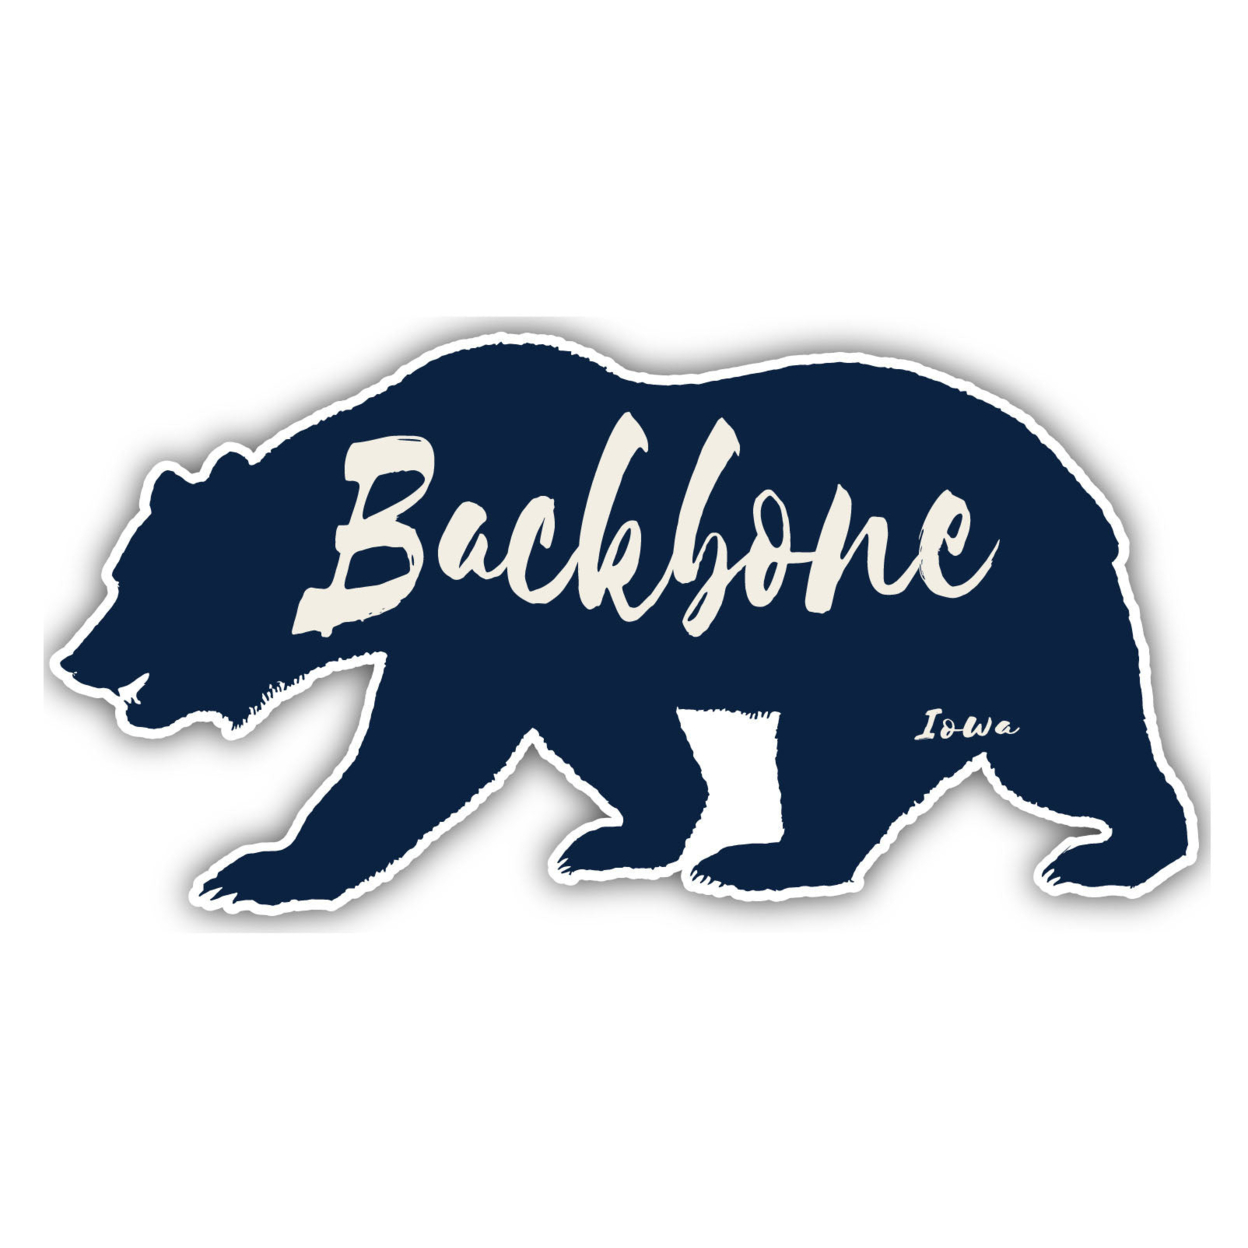 Backbone Iowa Souvenir Decorative Stickers (Choose Theme And Size) - 4-Pack, 4-Inch, Bear